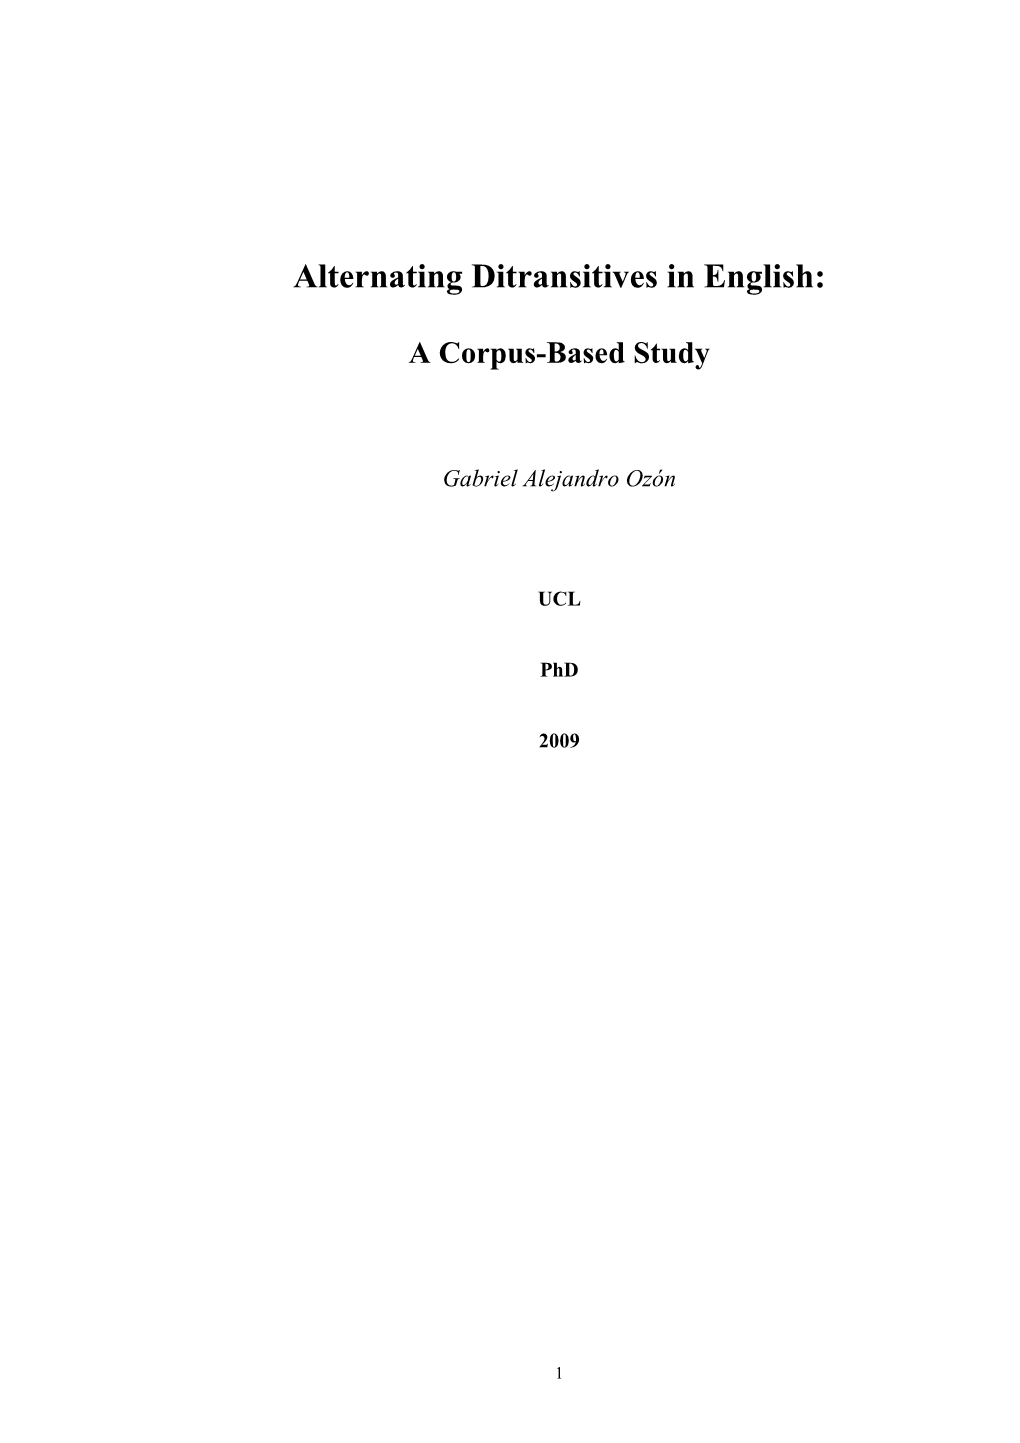 Alternating Ditransitives in English: a Corpus-Based Study